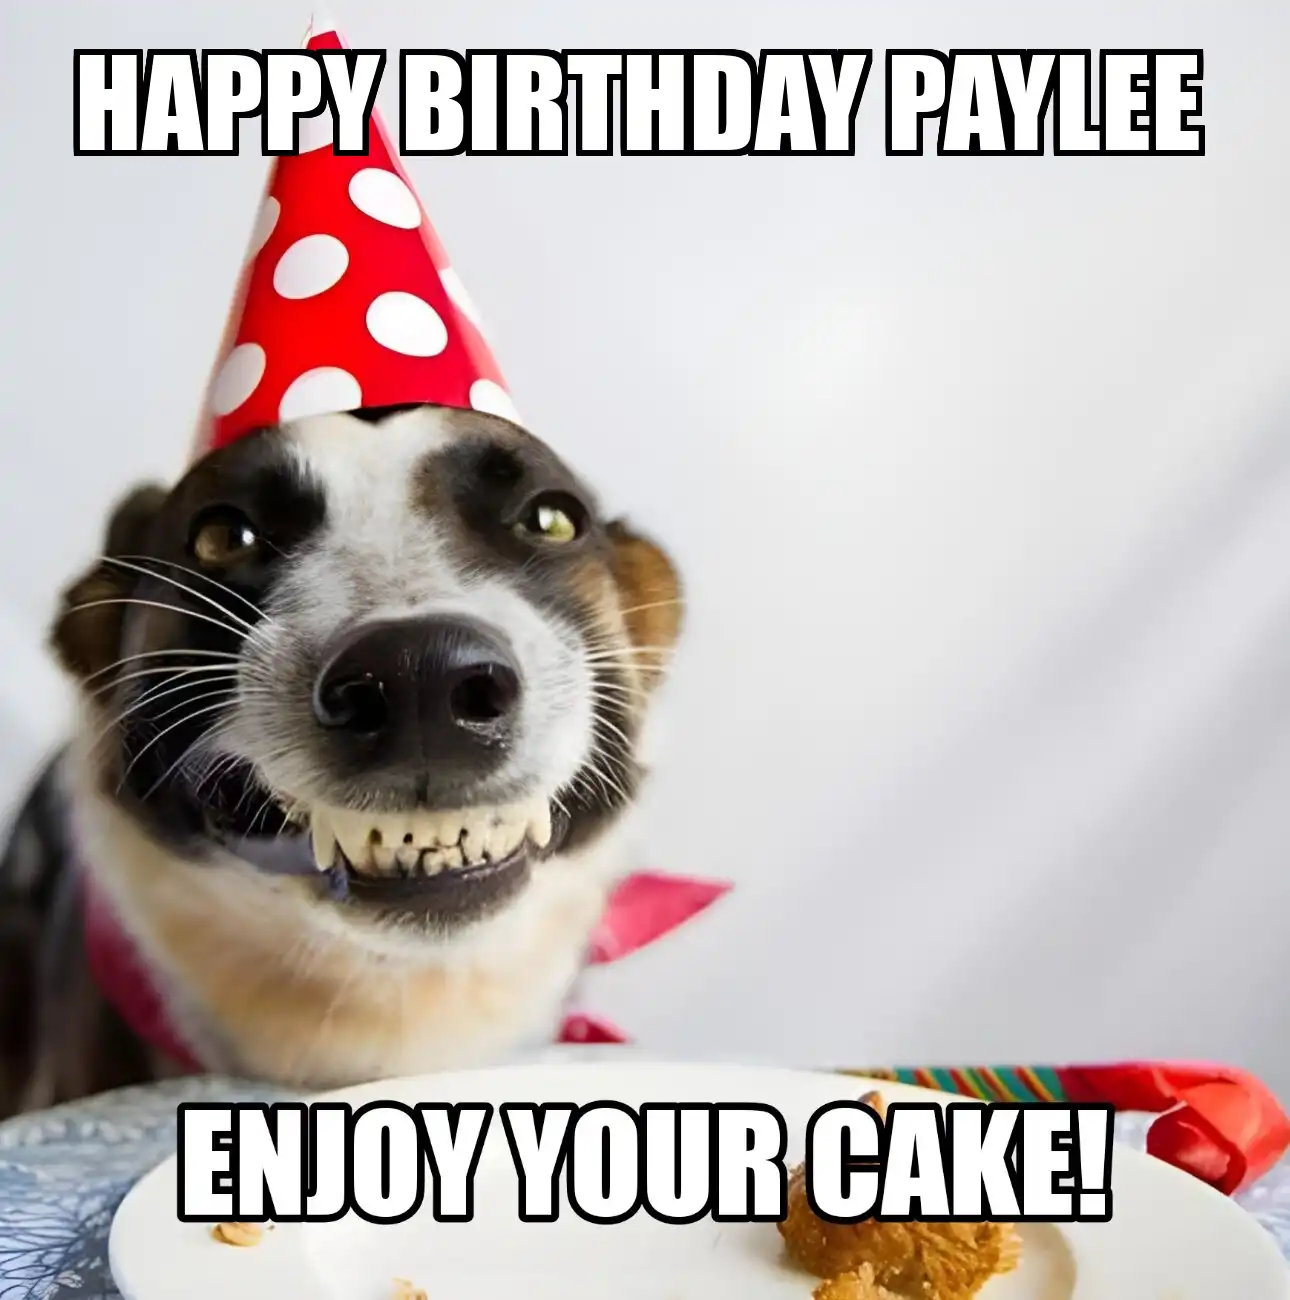 Happy Birthday Paylee Enjoy Your Cake Dog Meme